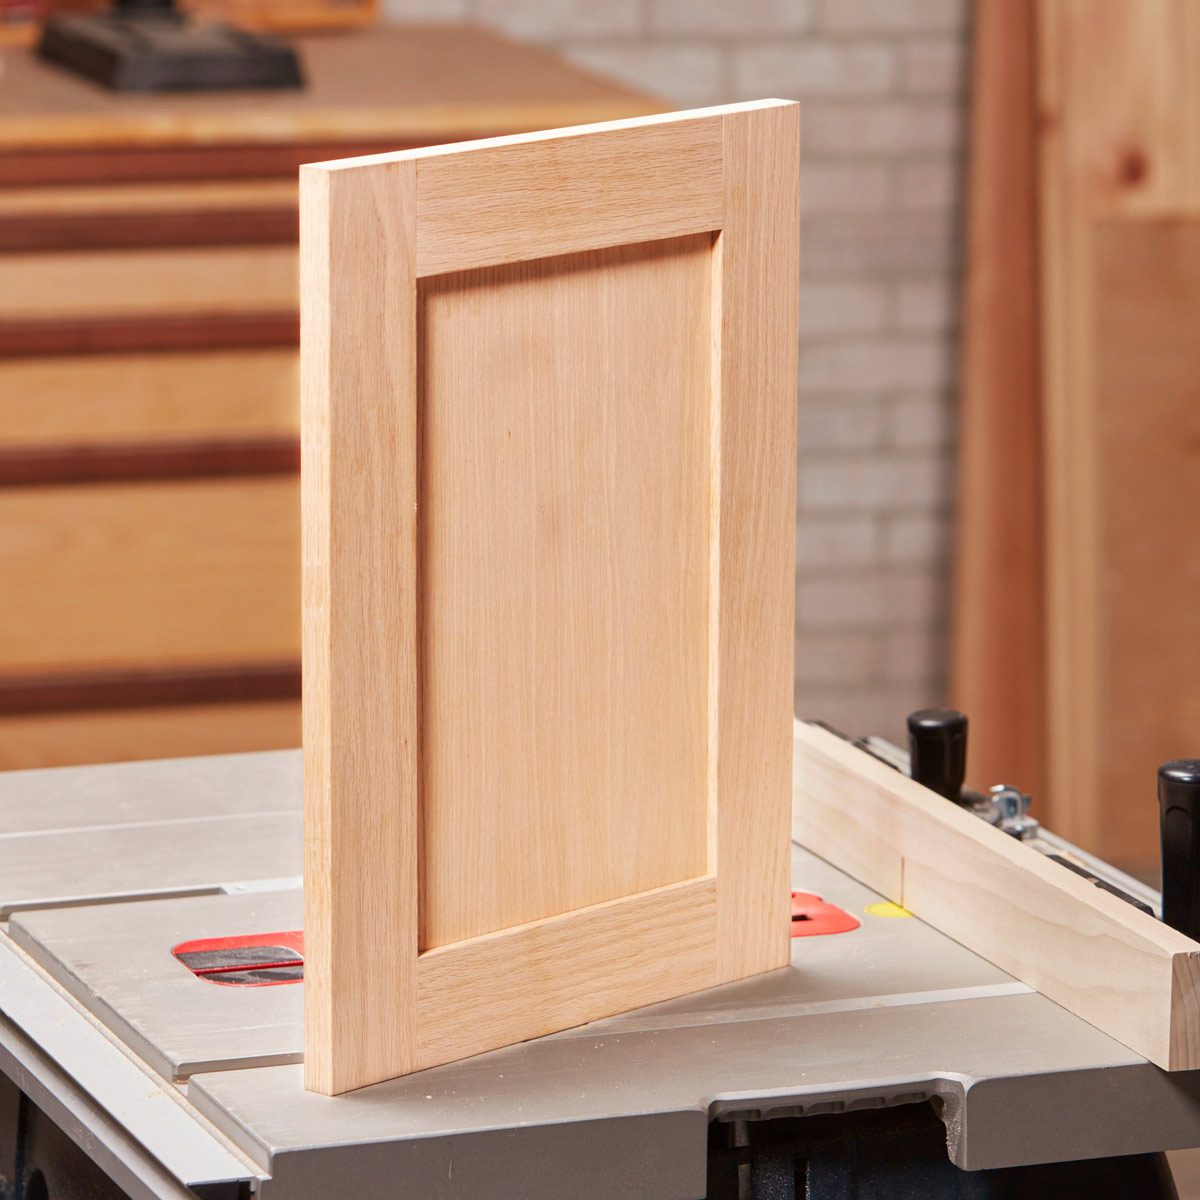 diy-cabinet-doors-how-to-build-and-install-cabinet-doors